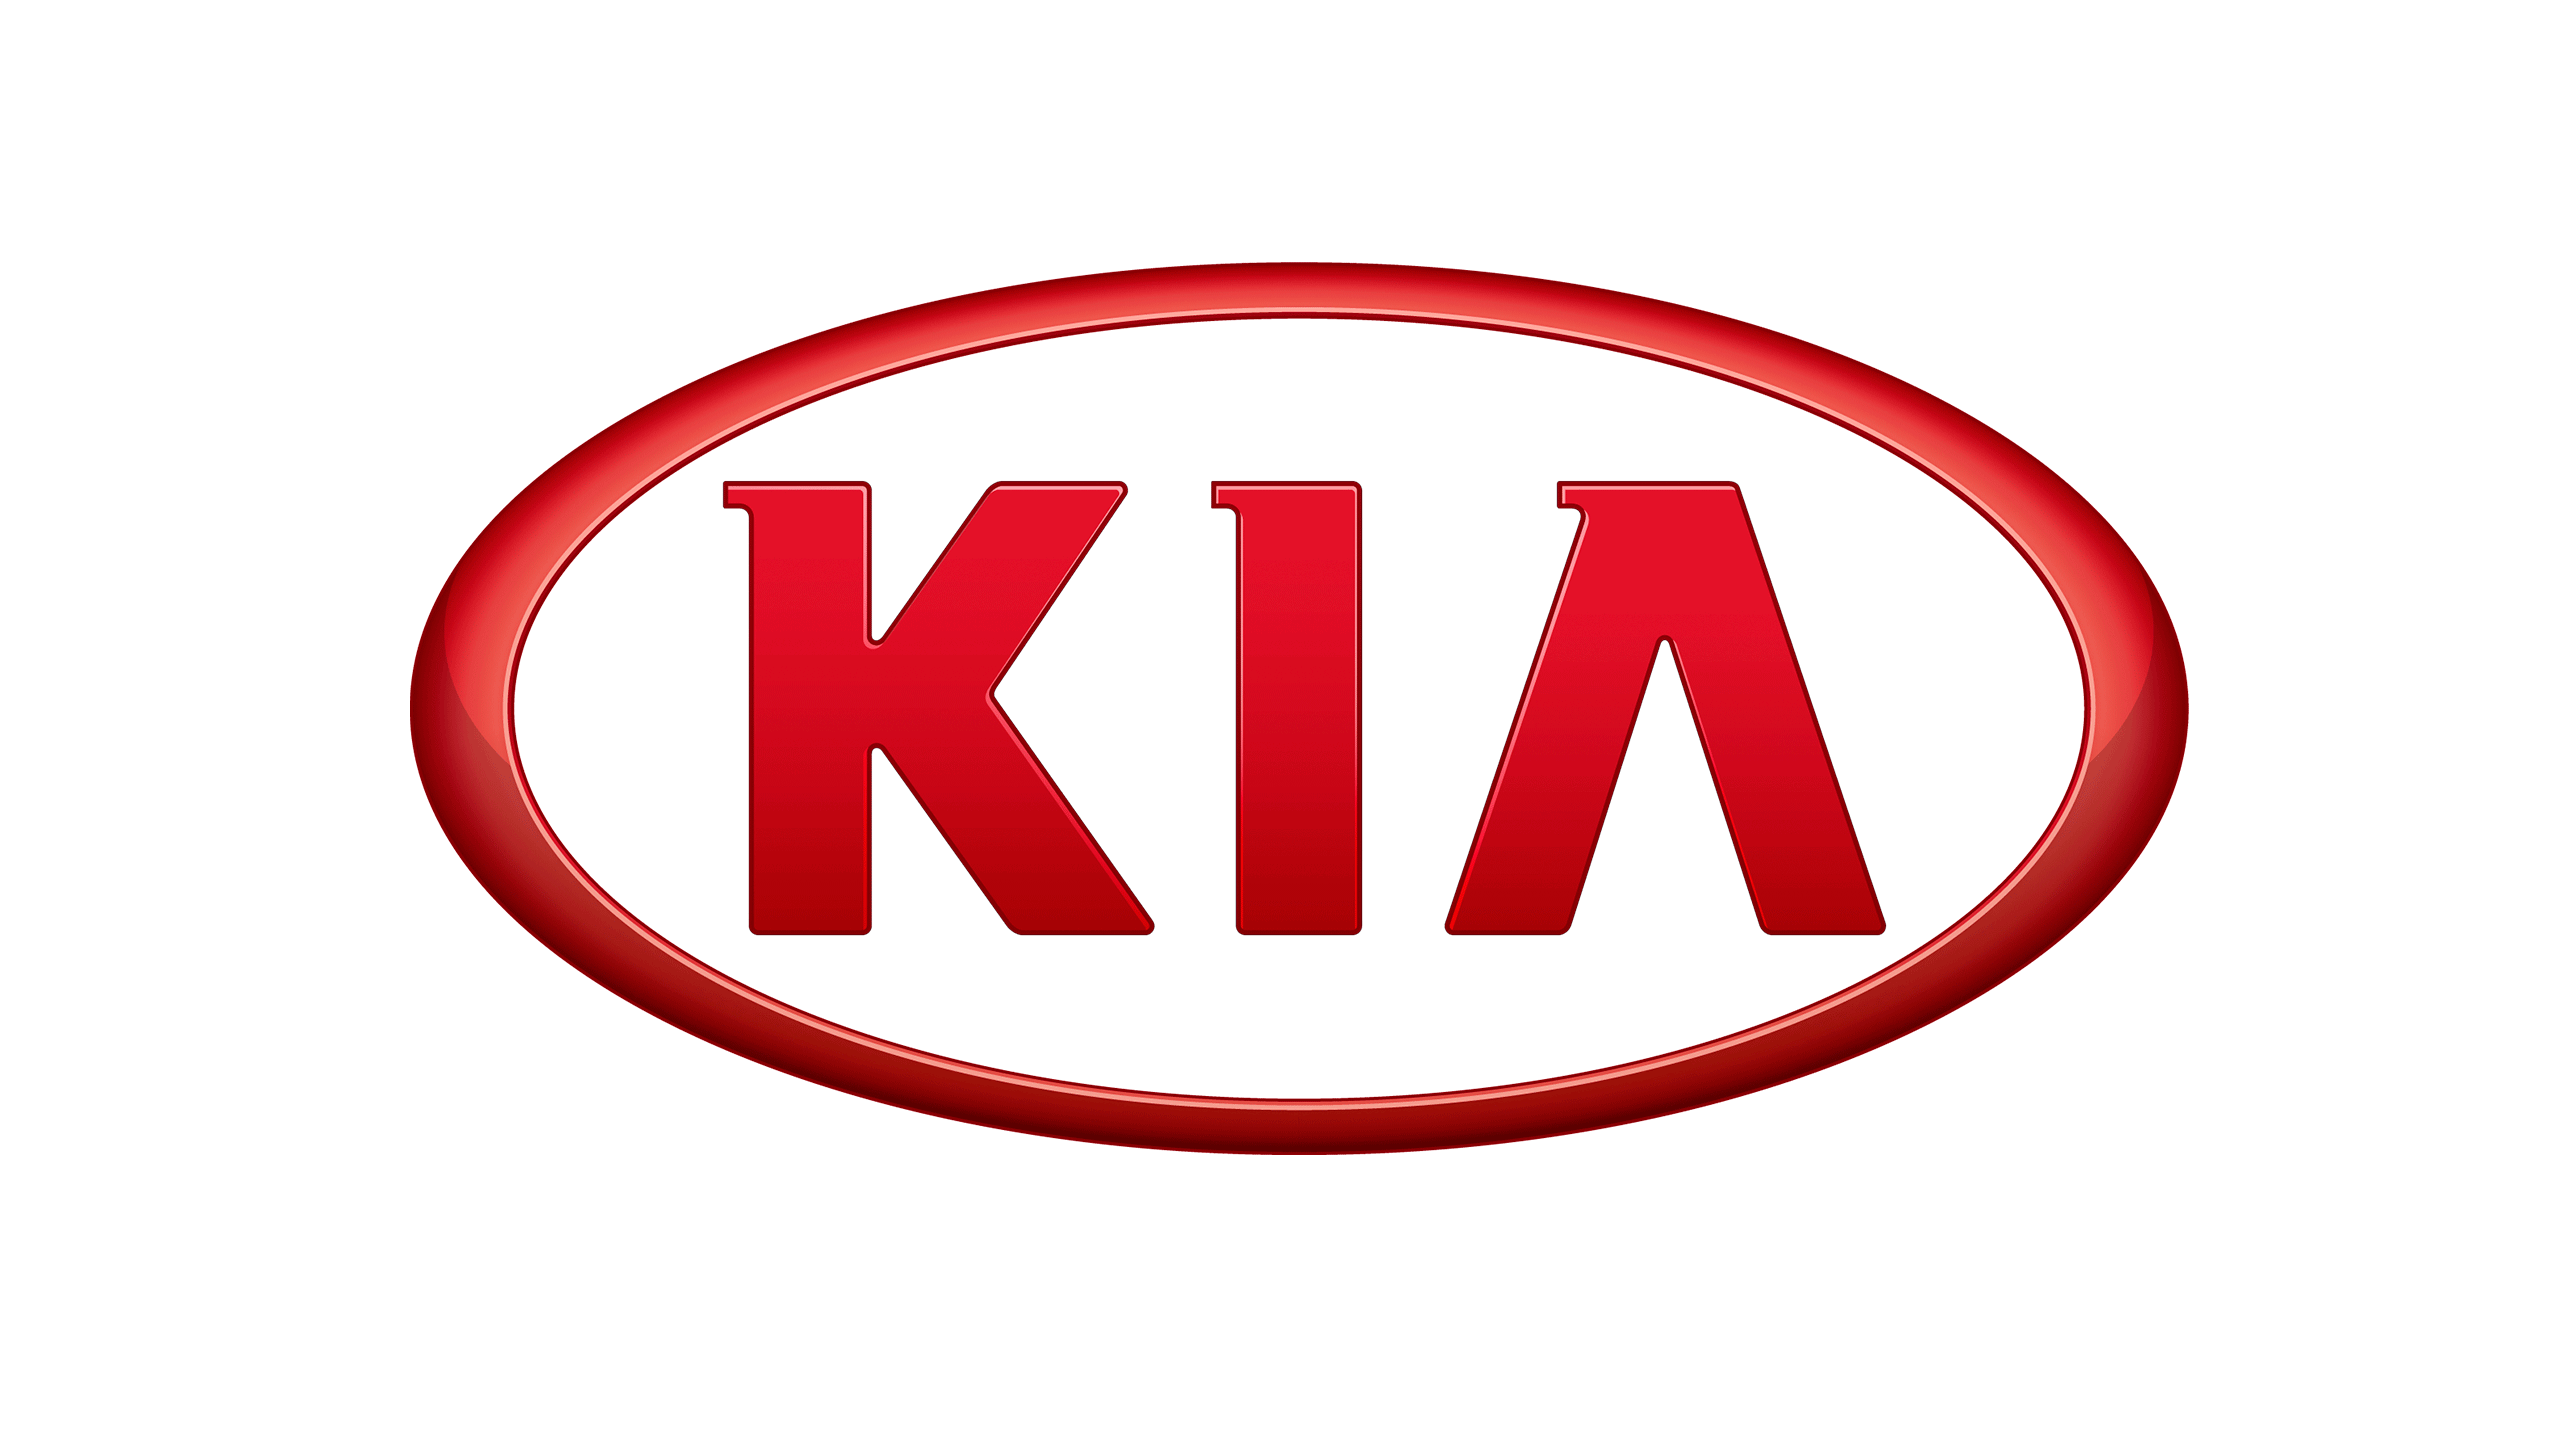 Kia Logo, 2K Wallpaper, Meaning, Information